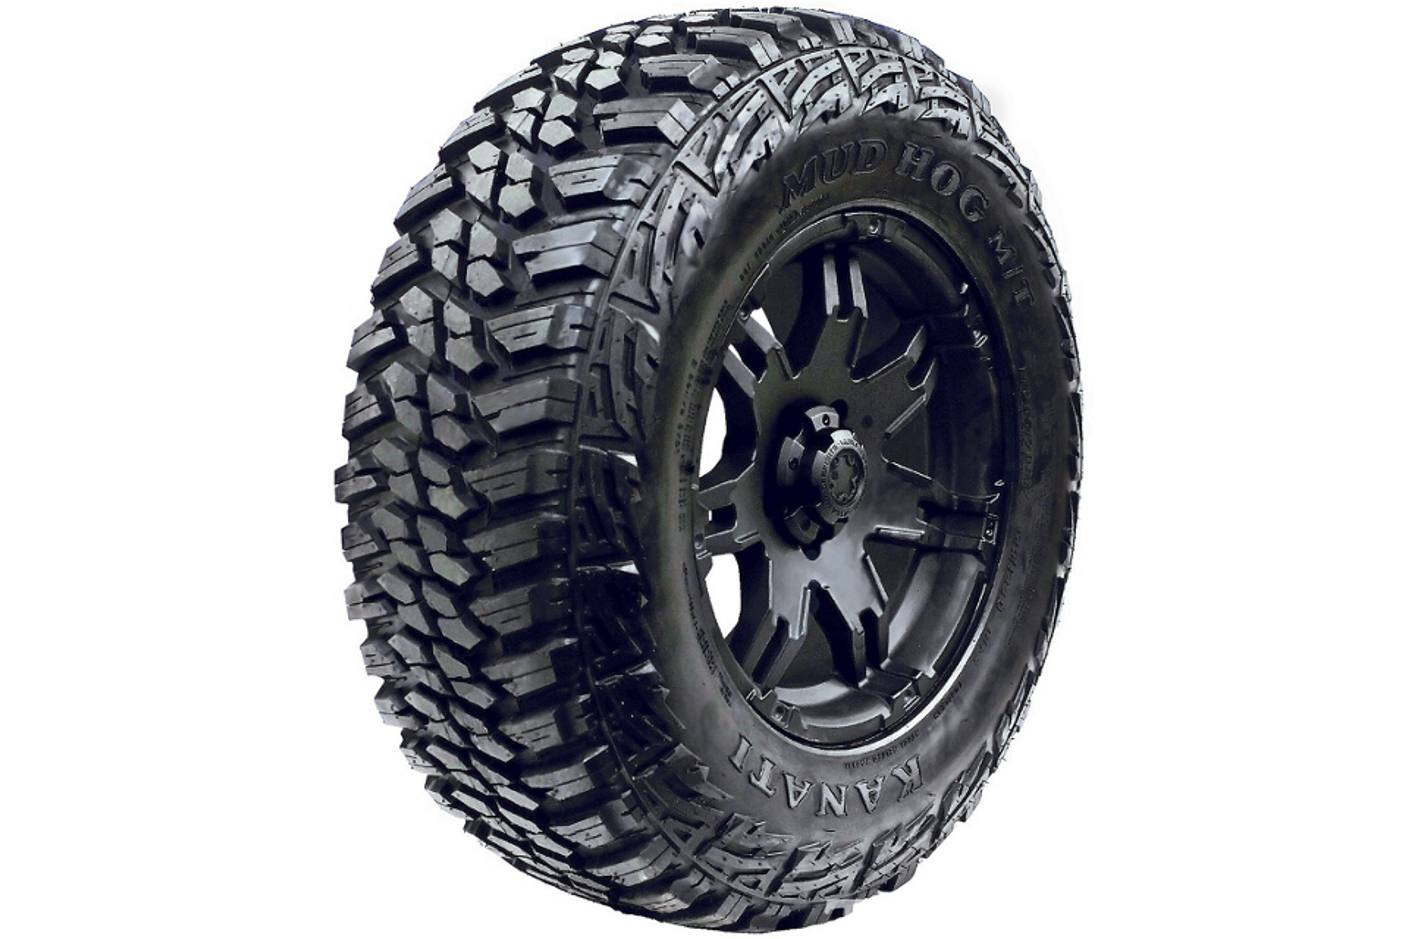 Kanati Mud Hog Tire, Best Mud tire for the street